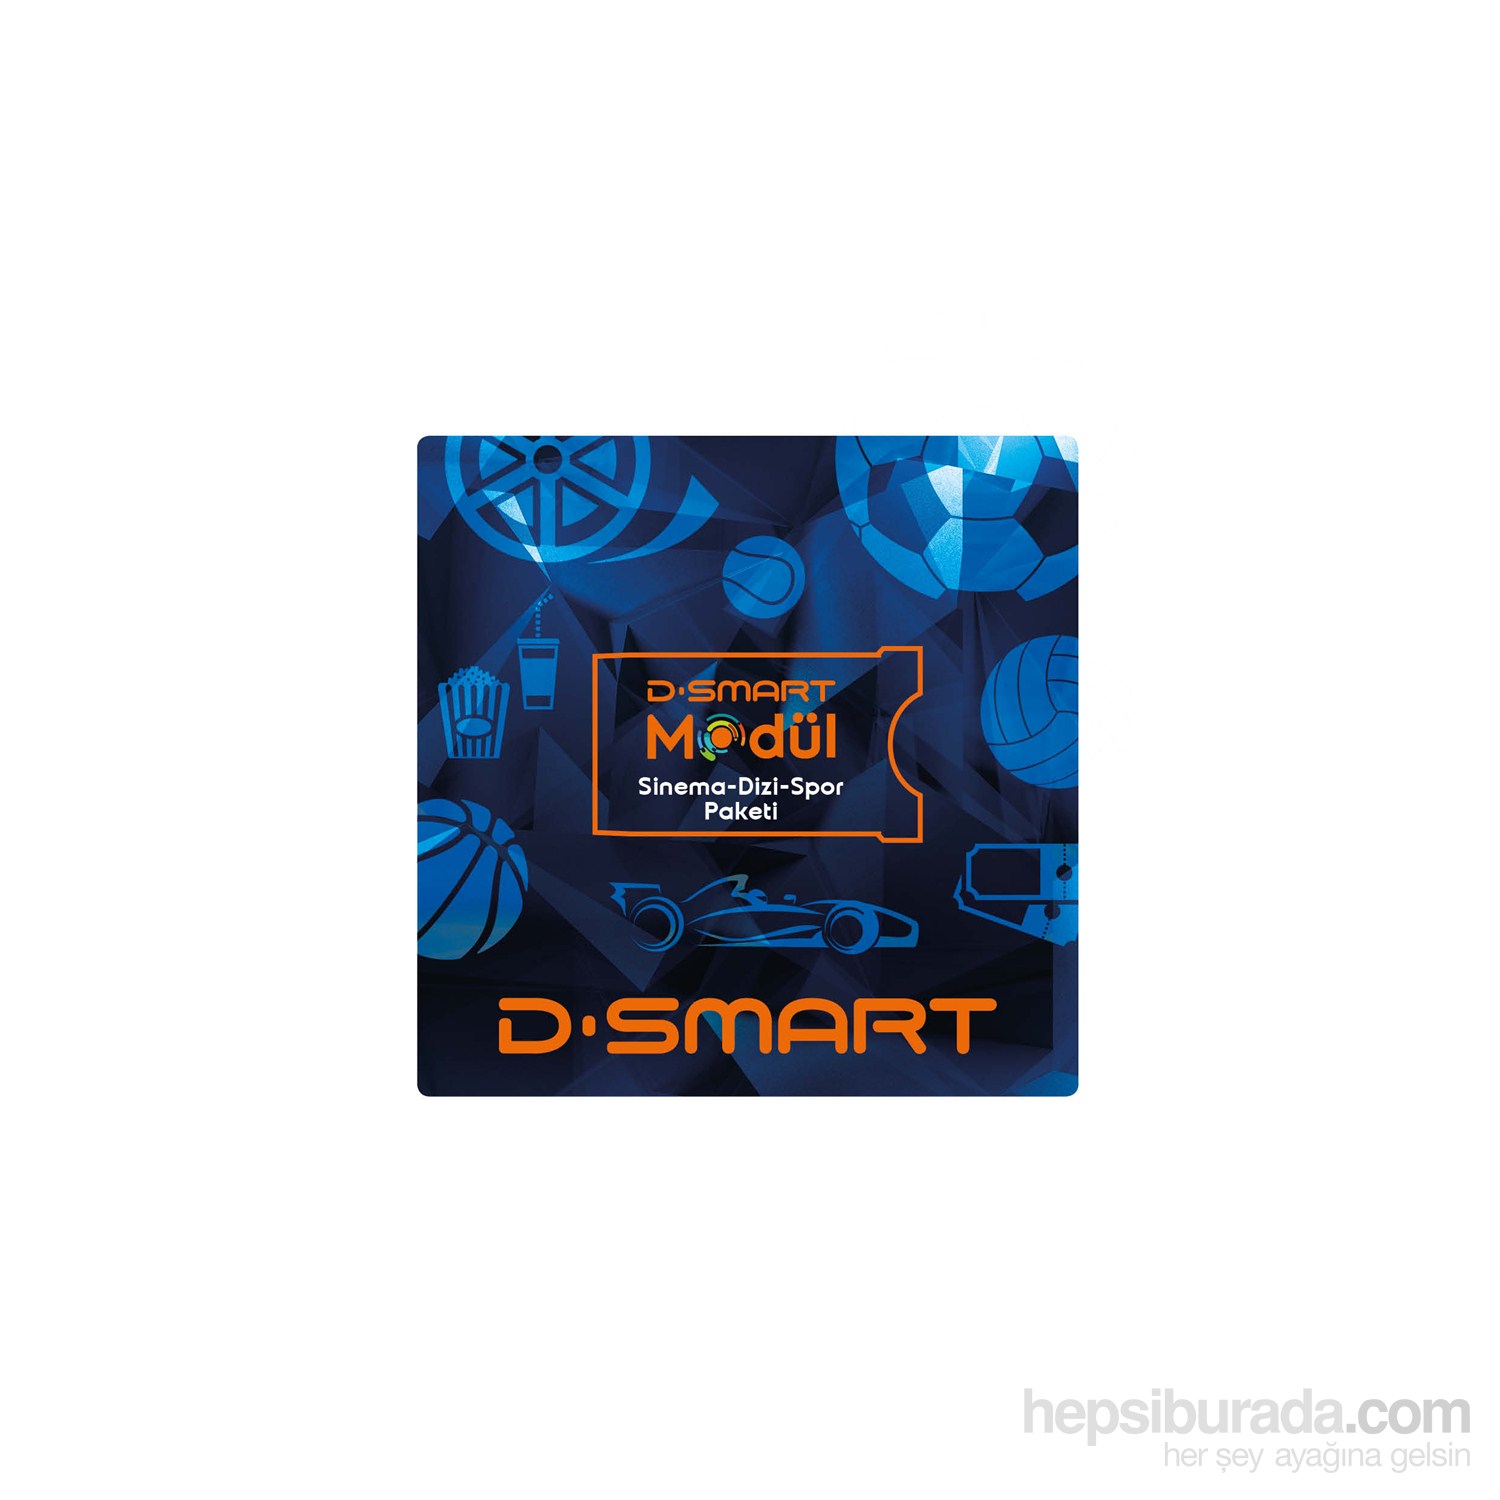 D-Smart Modül 24 Ay Kullanım Bedeli + HD Spor + Sinema + Dizi Paketi